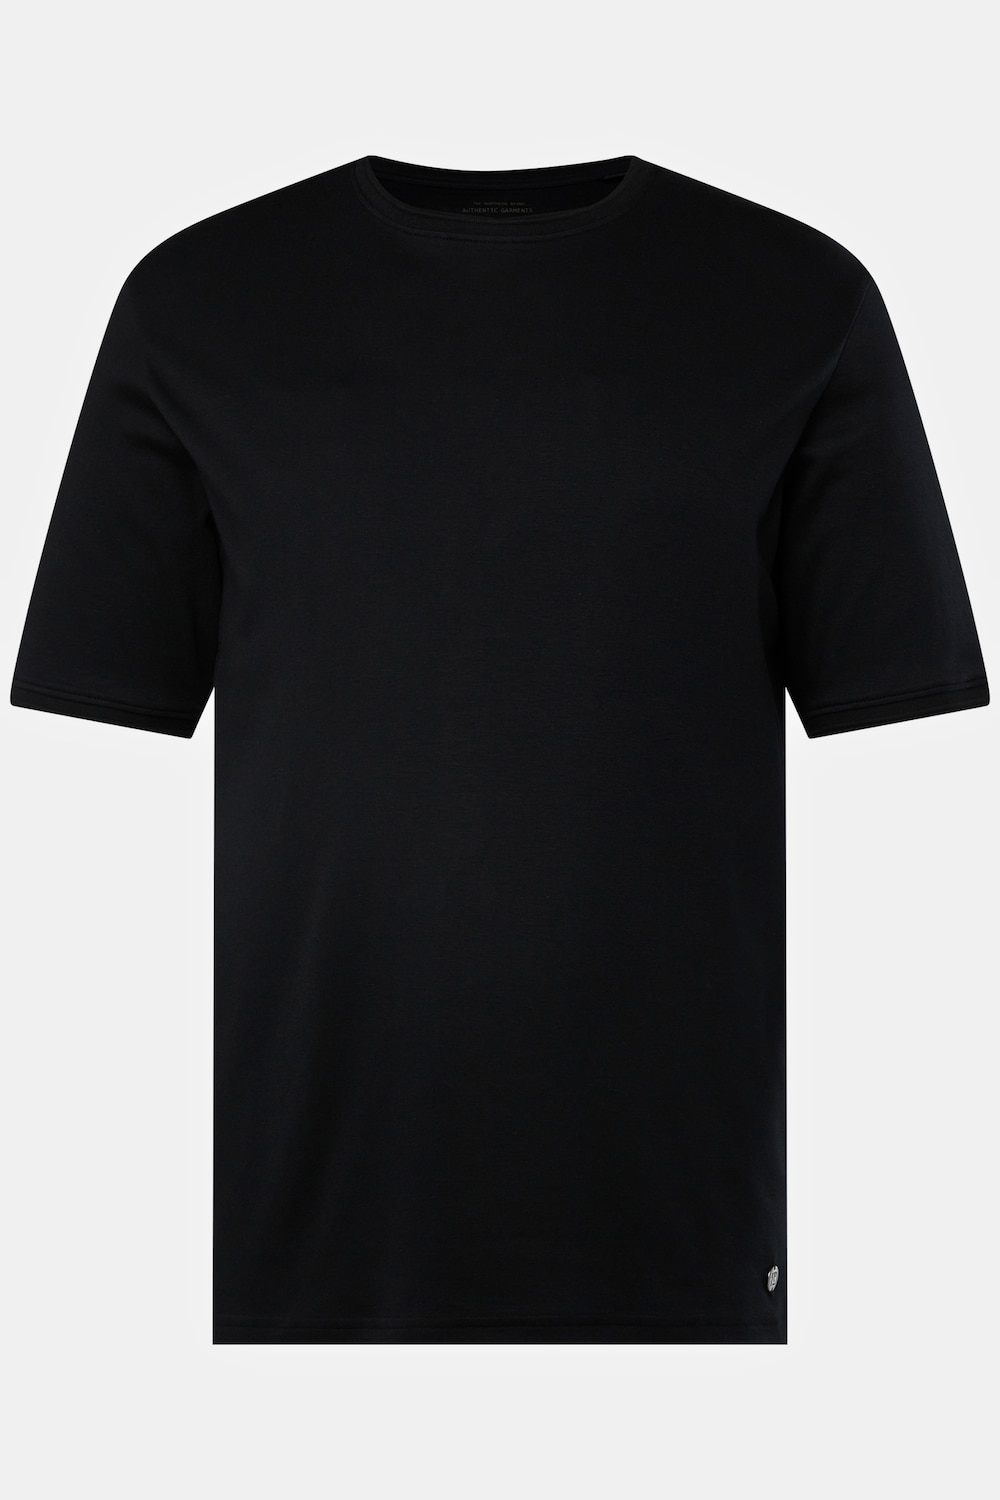 Grote Maten T-shirt, Heren, zwart, Maat: 8XL, Katoen/Viscose, JP1880